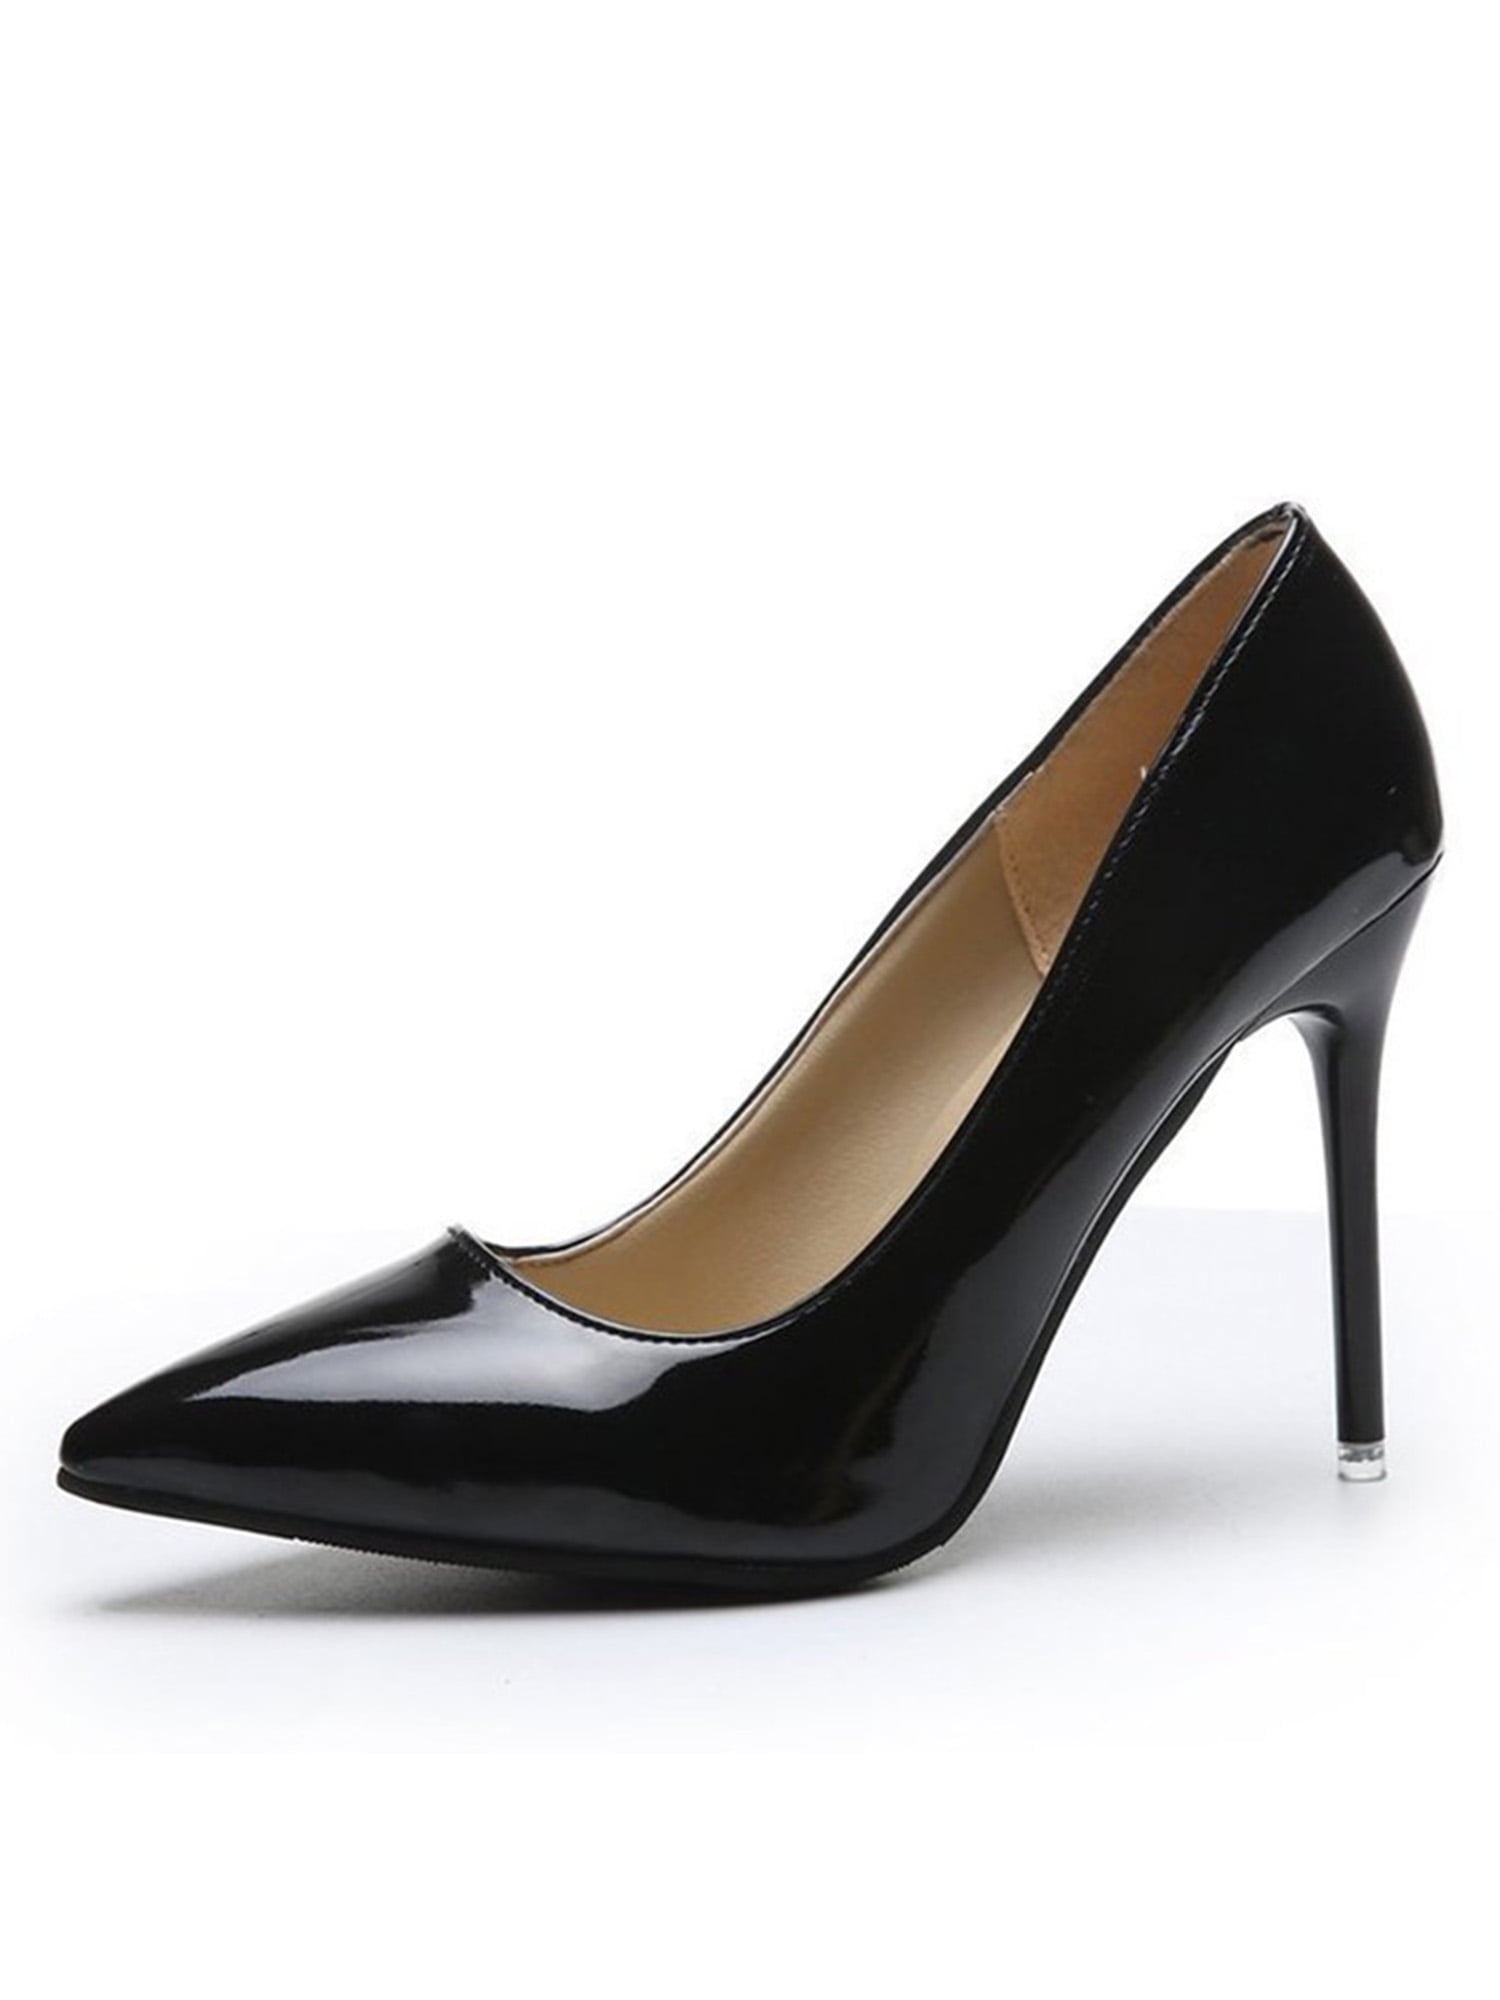 Fahrenheit PVC Women's High Heel Sandals in Black - Walmart.com